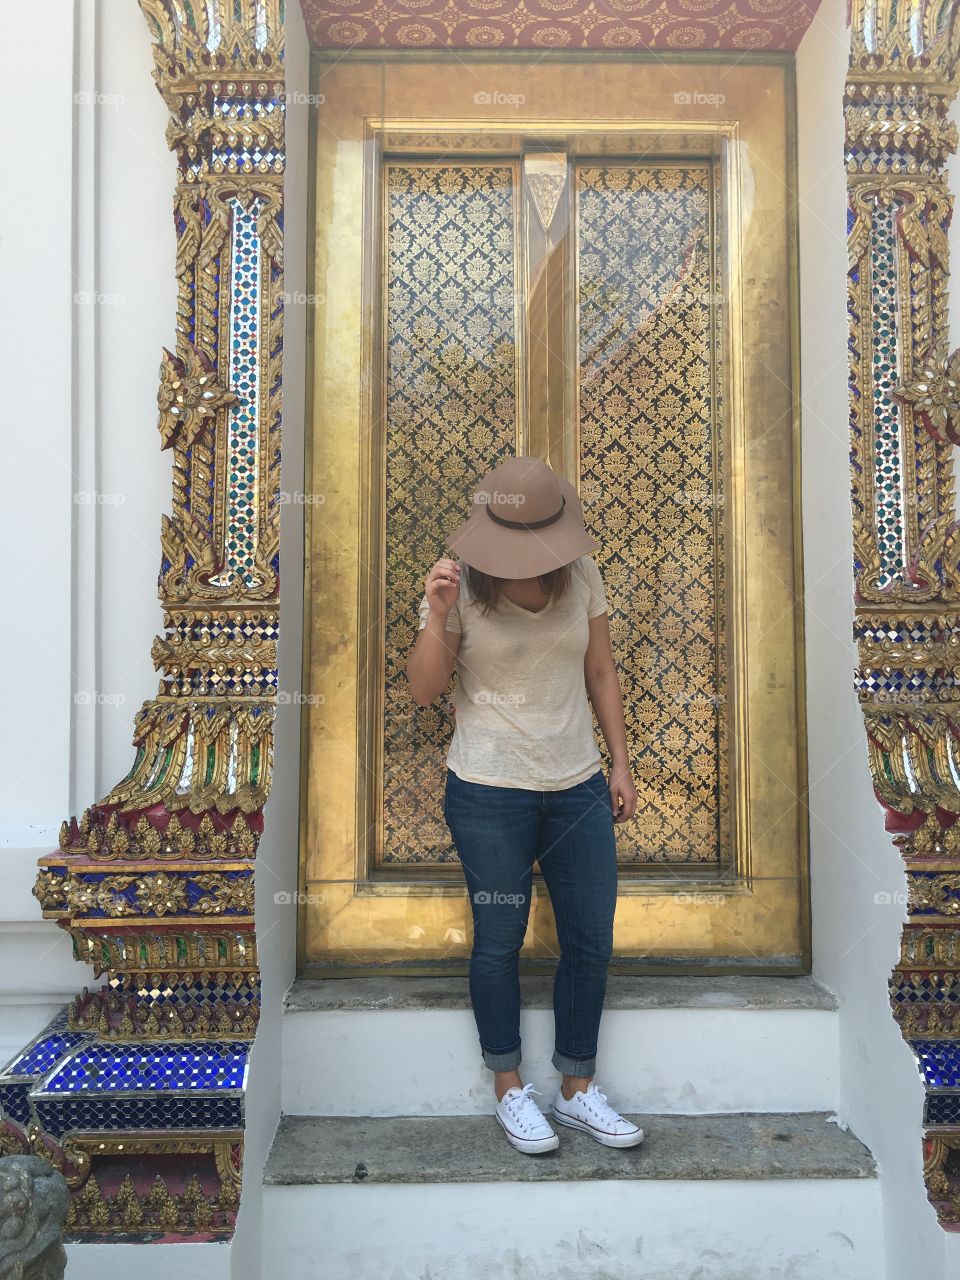 Temple doorway Bangkok Thailand 